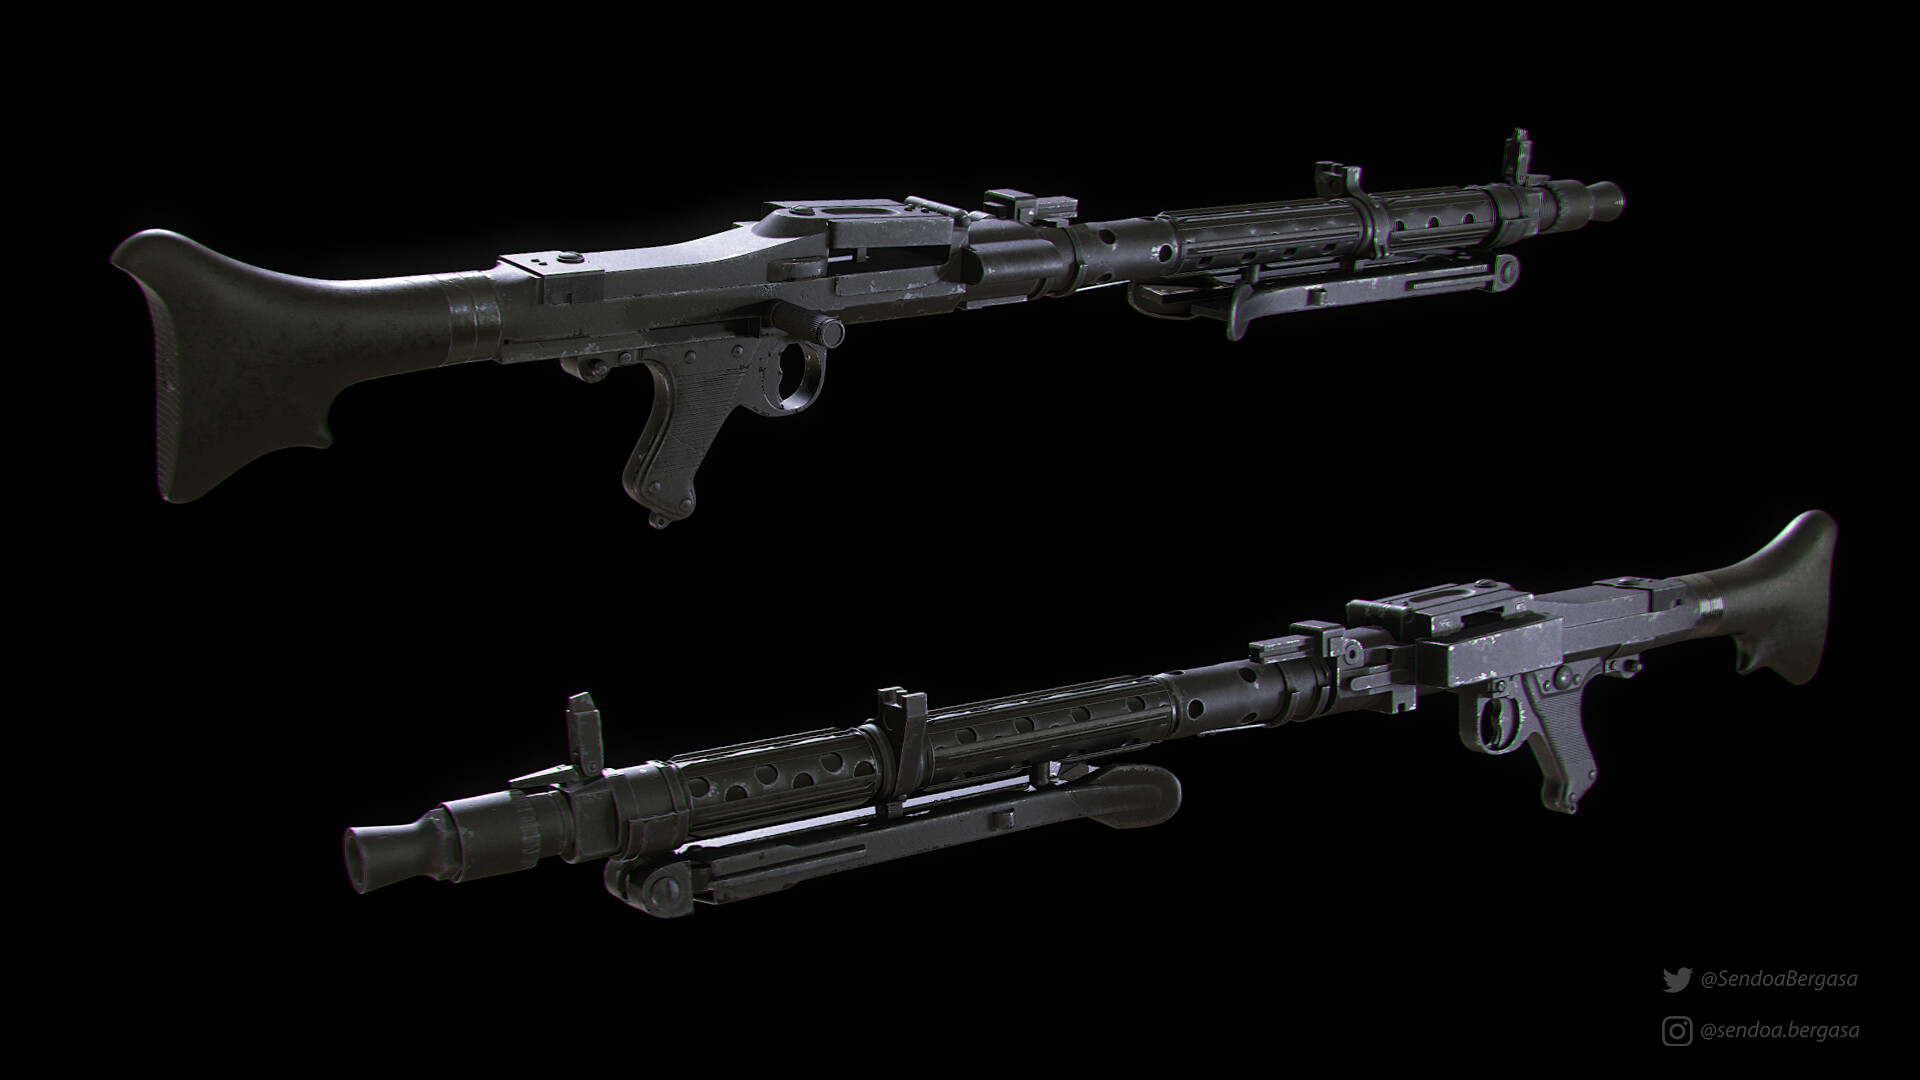 sendoa-bergasa-dlt19-blaster-rifle-001.jpg